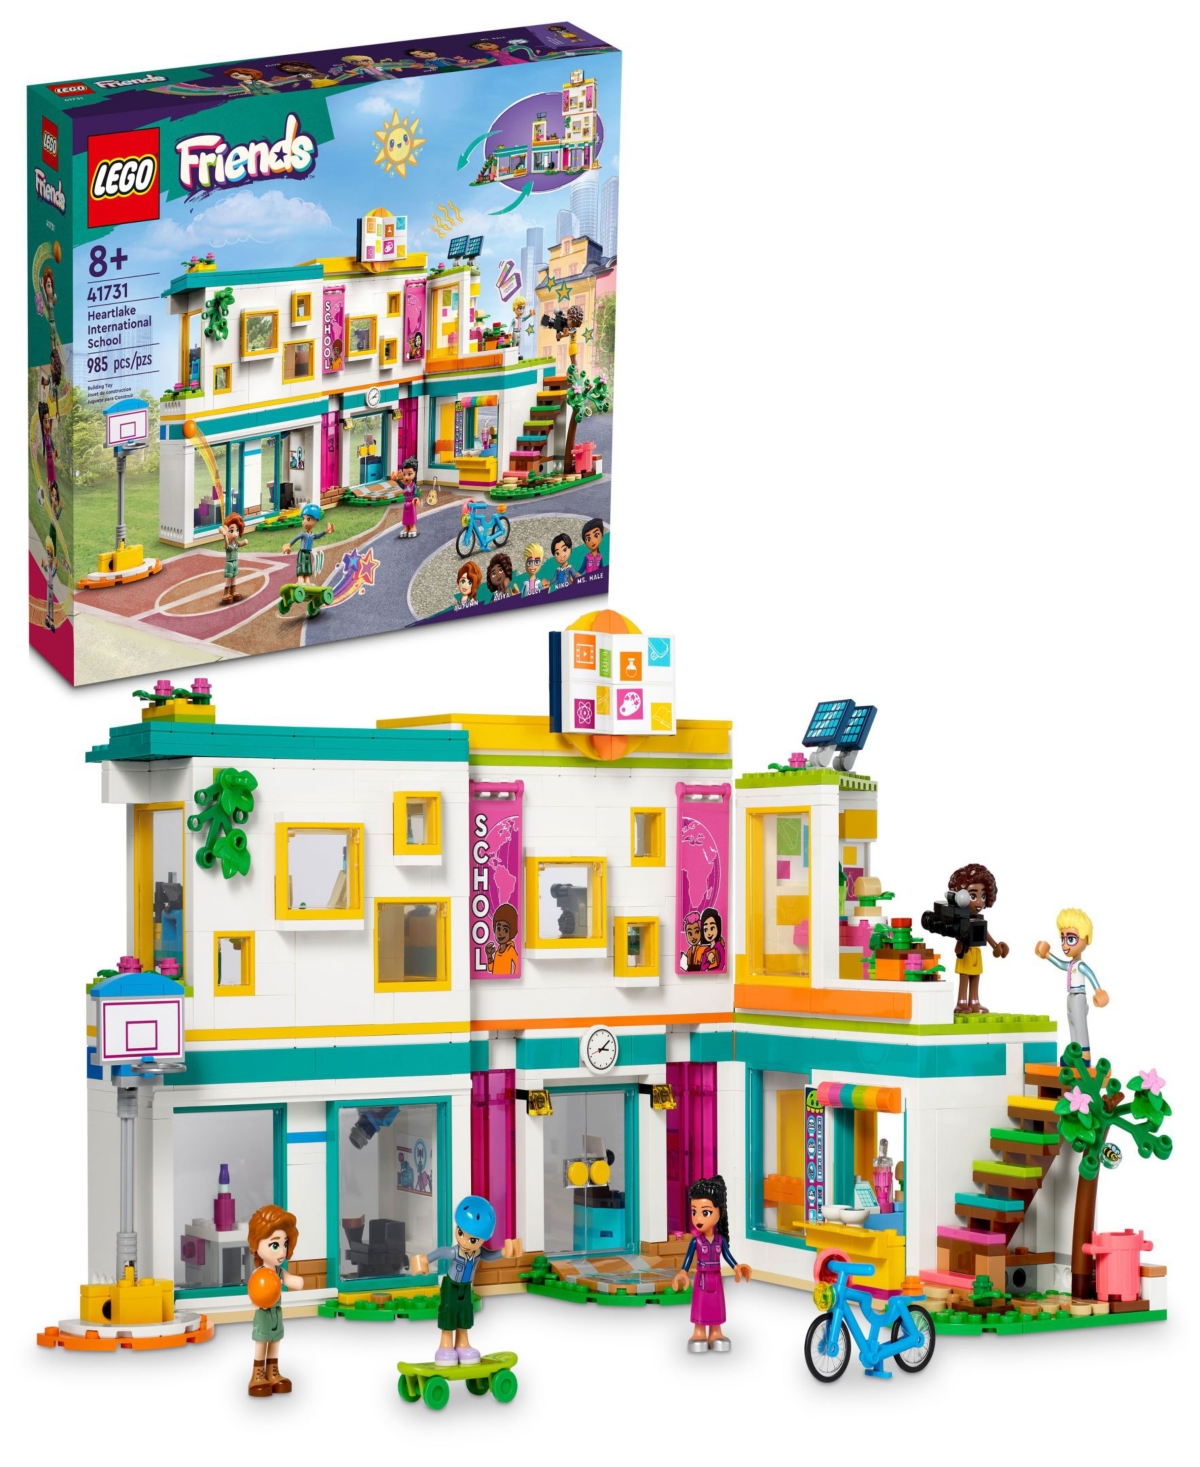 Lego Friends Heartlake International School 41731 Toy Building Set With Aliya, Olly, Autumn, Ms. Malu Hal In Multicolor